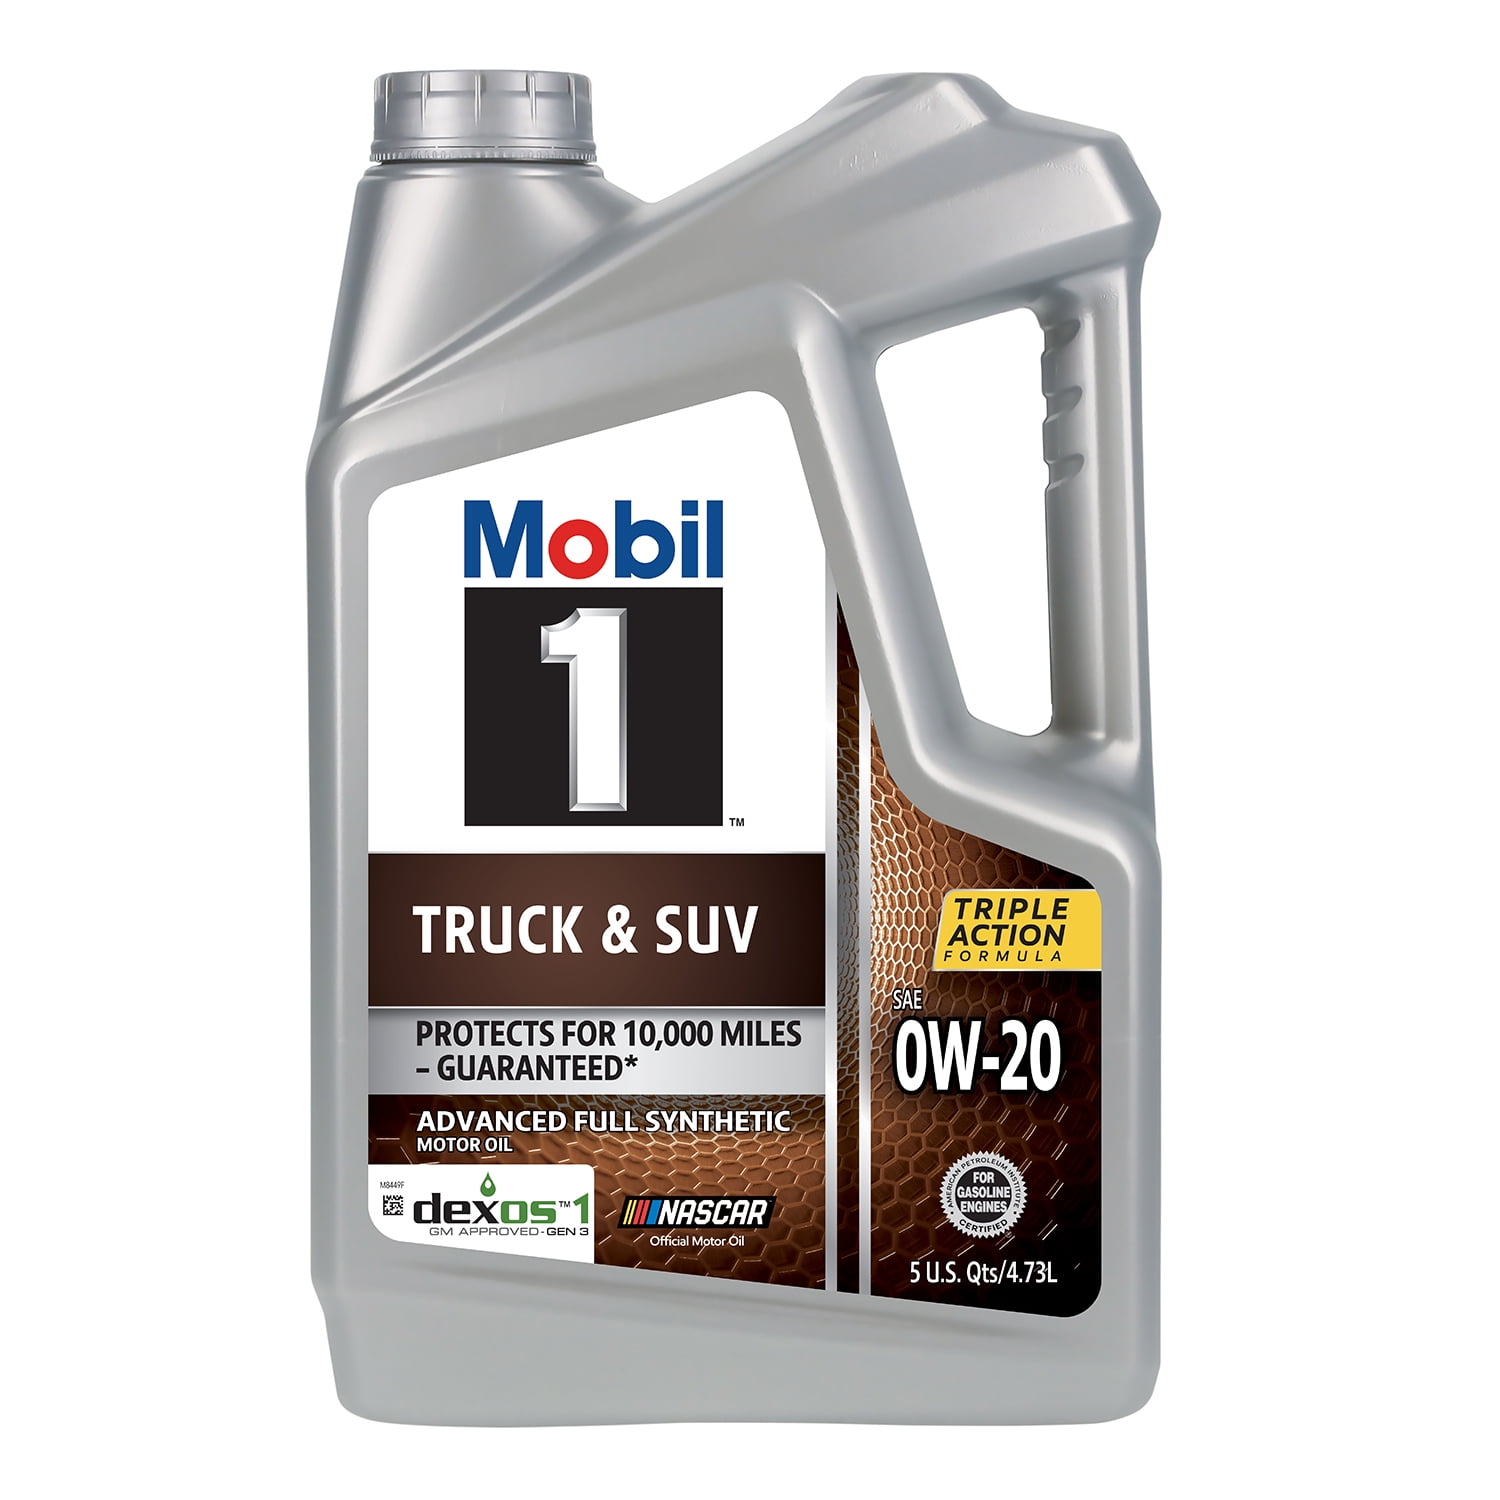 Mobil 1 Truck & SUV Full Synthetic Motor Oil 0W-20, 5 qt - 1